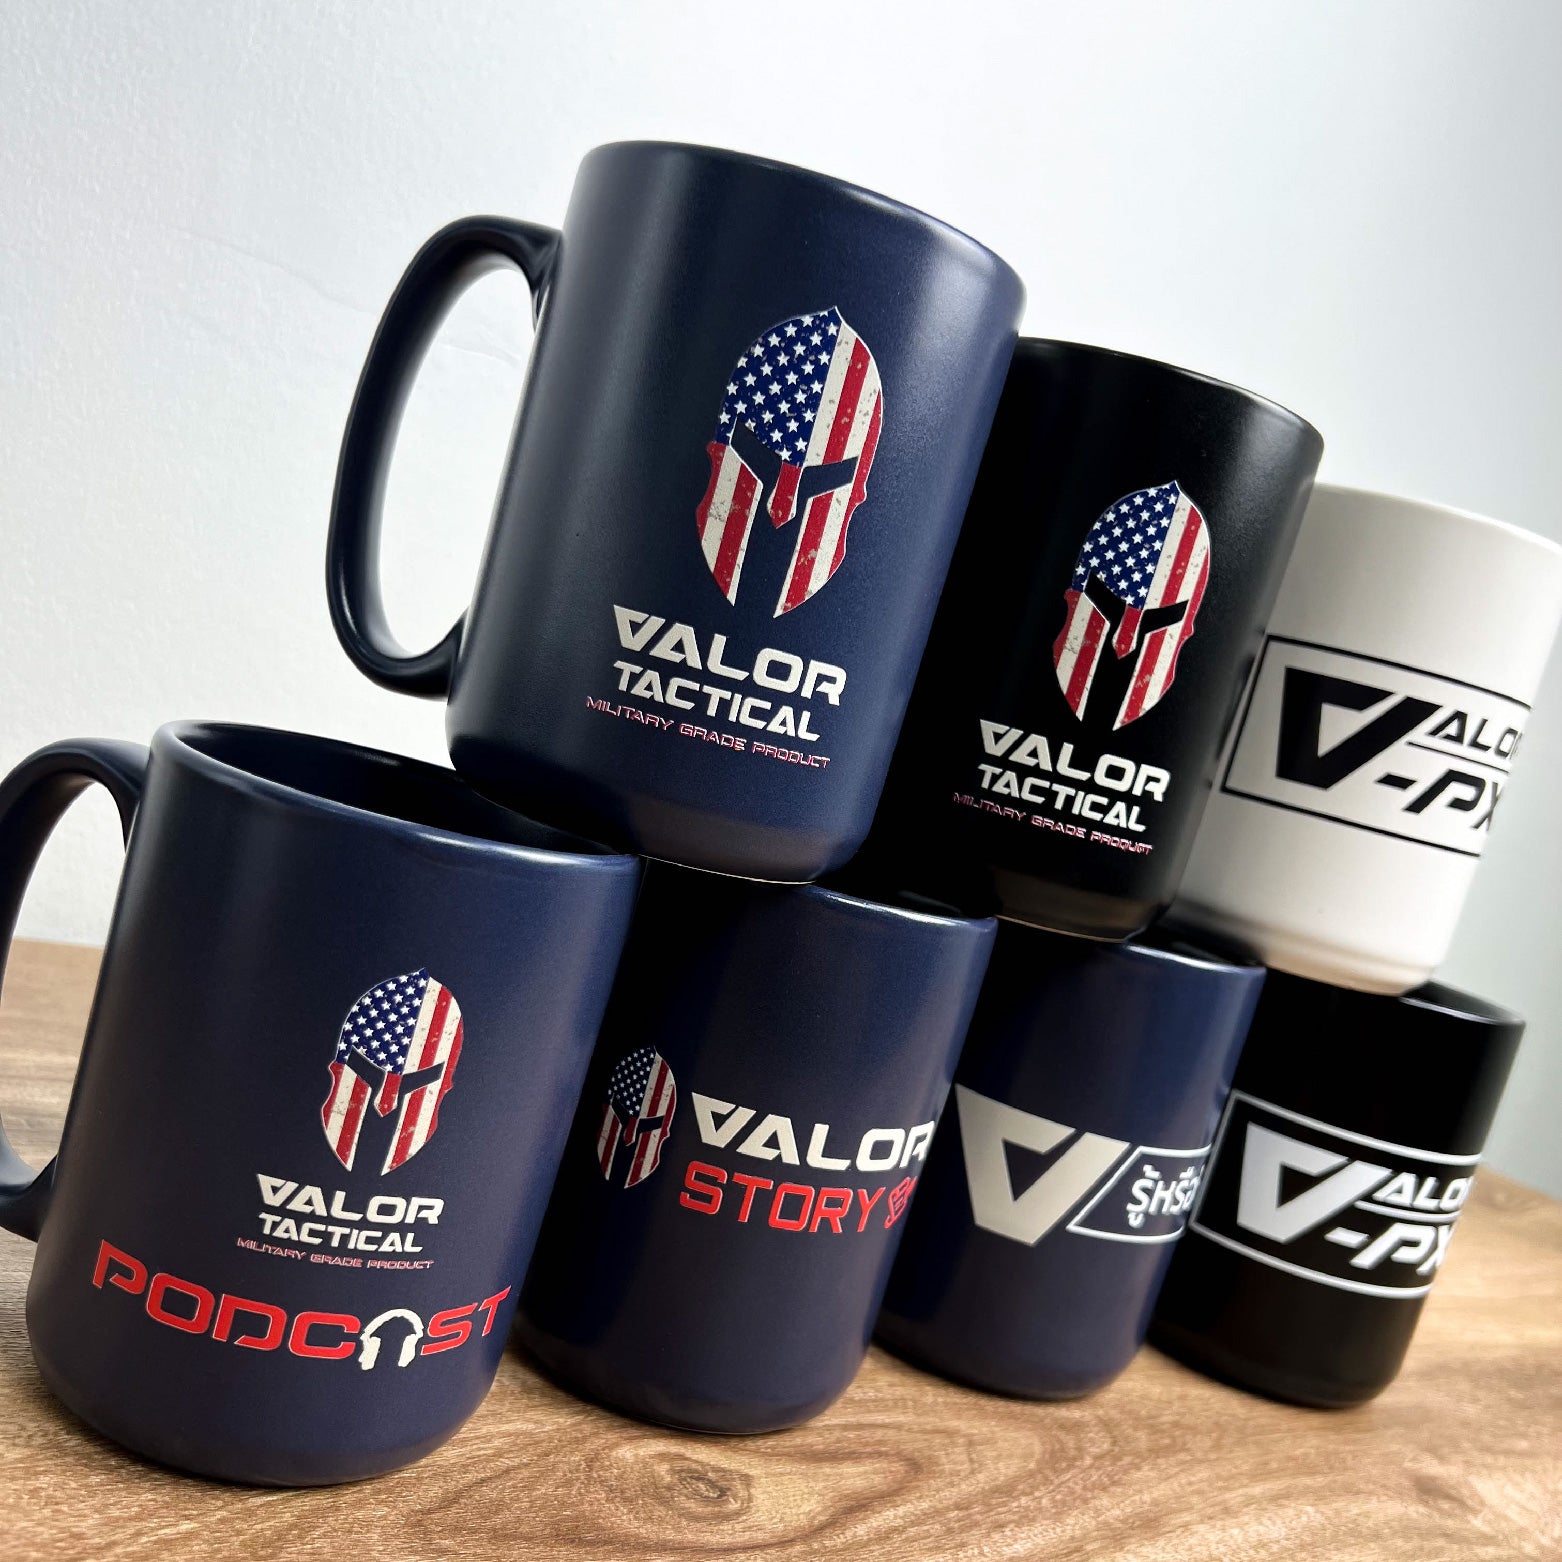 Valor PX Ceramic Mug แก้วกาแฟ - Valor Tactical Logo